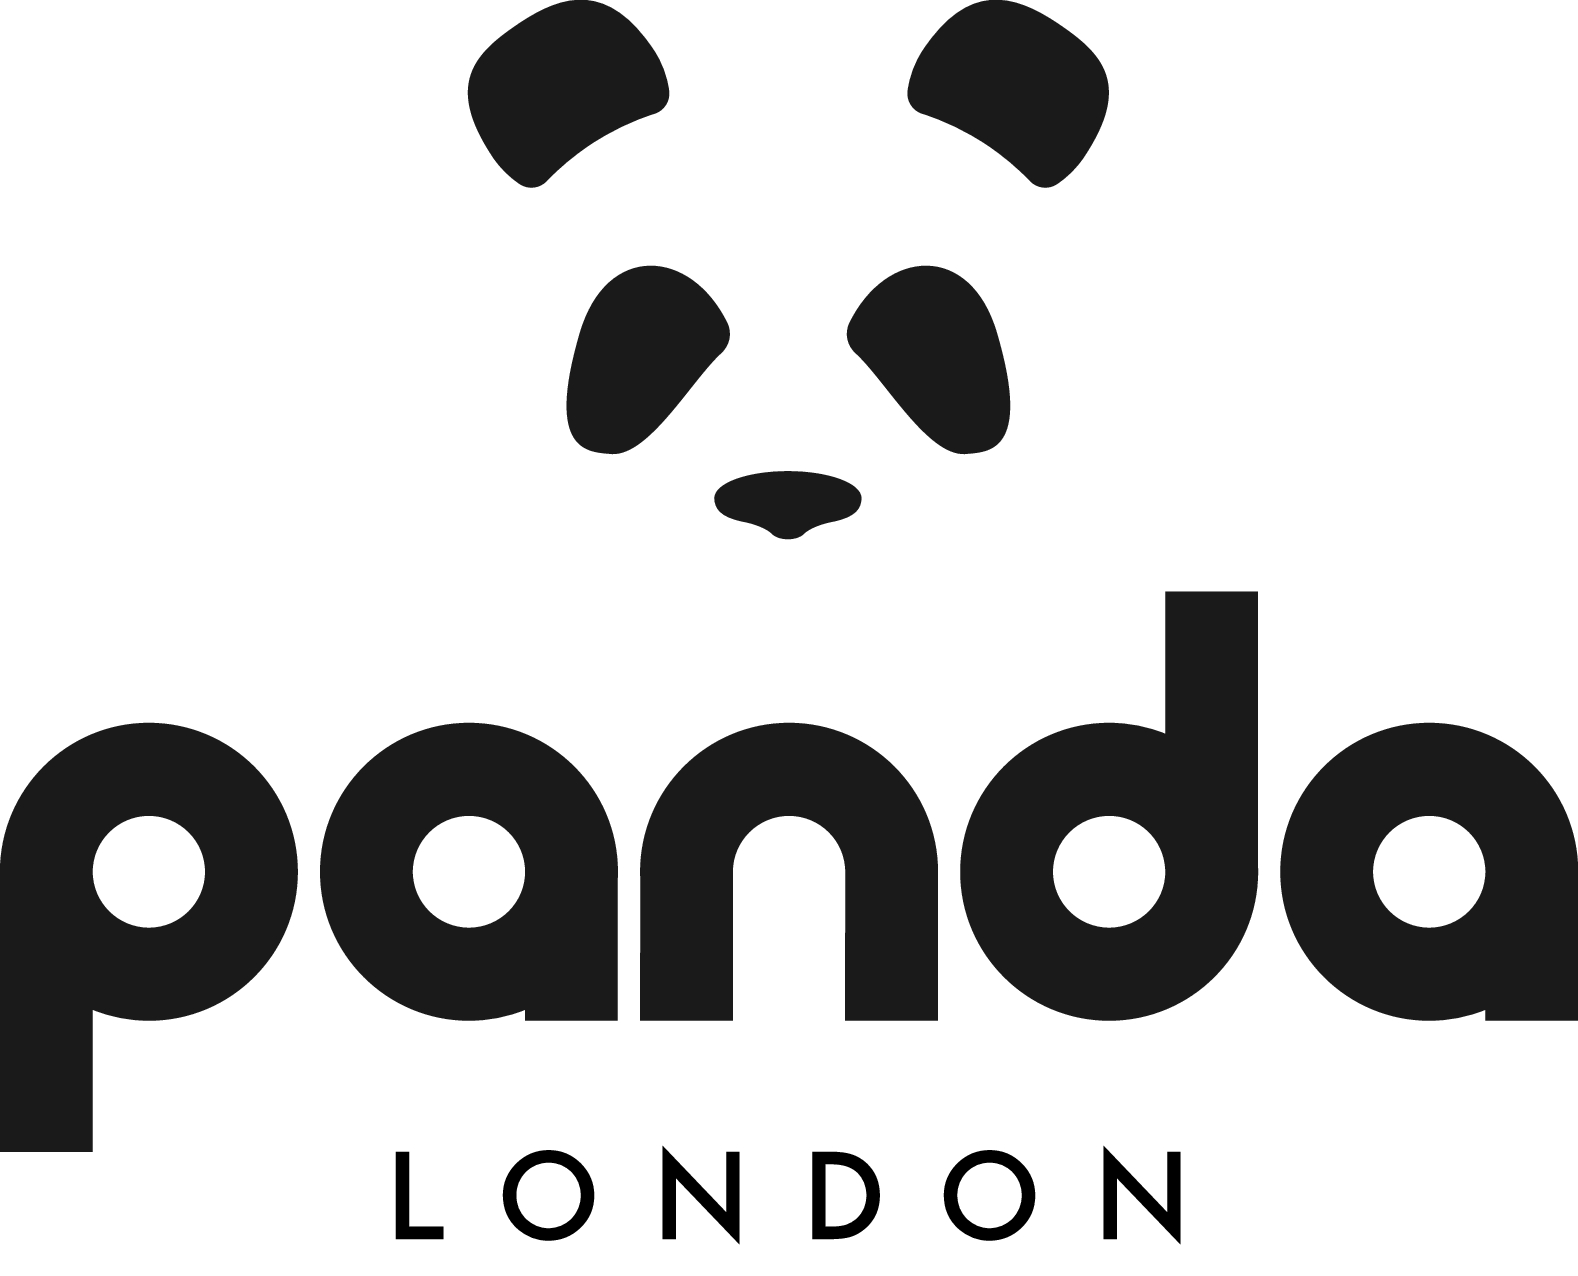 Panda London รหัสโปรโมชั่น 